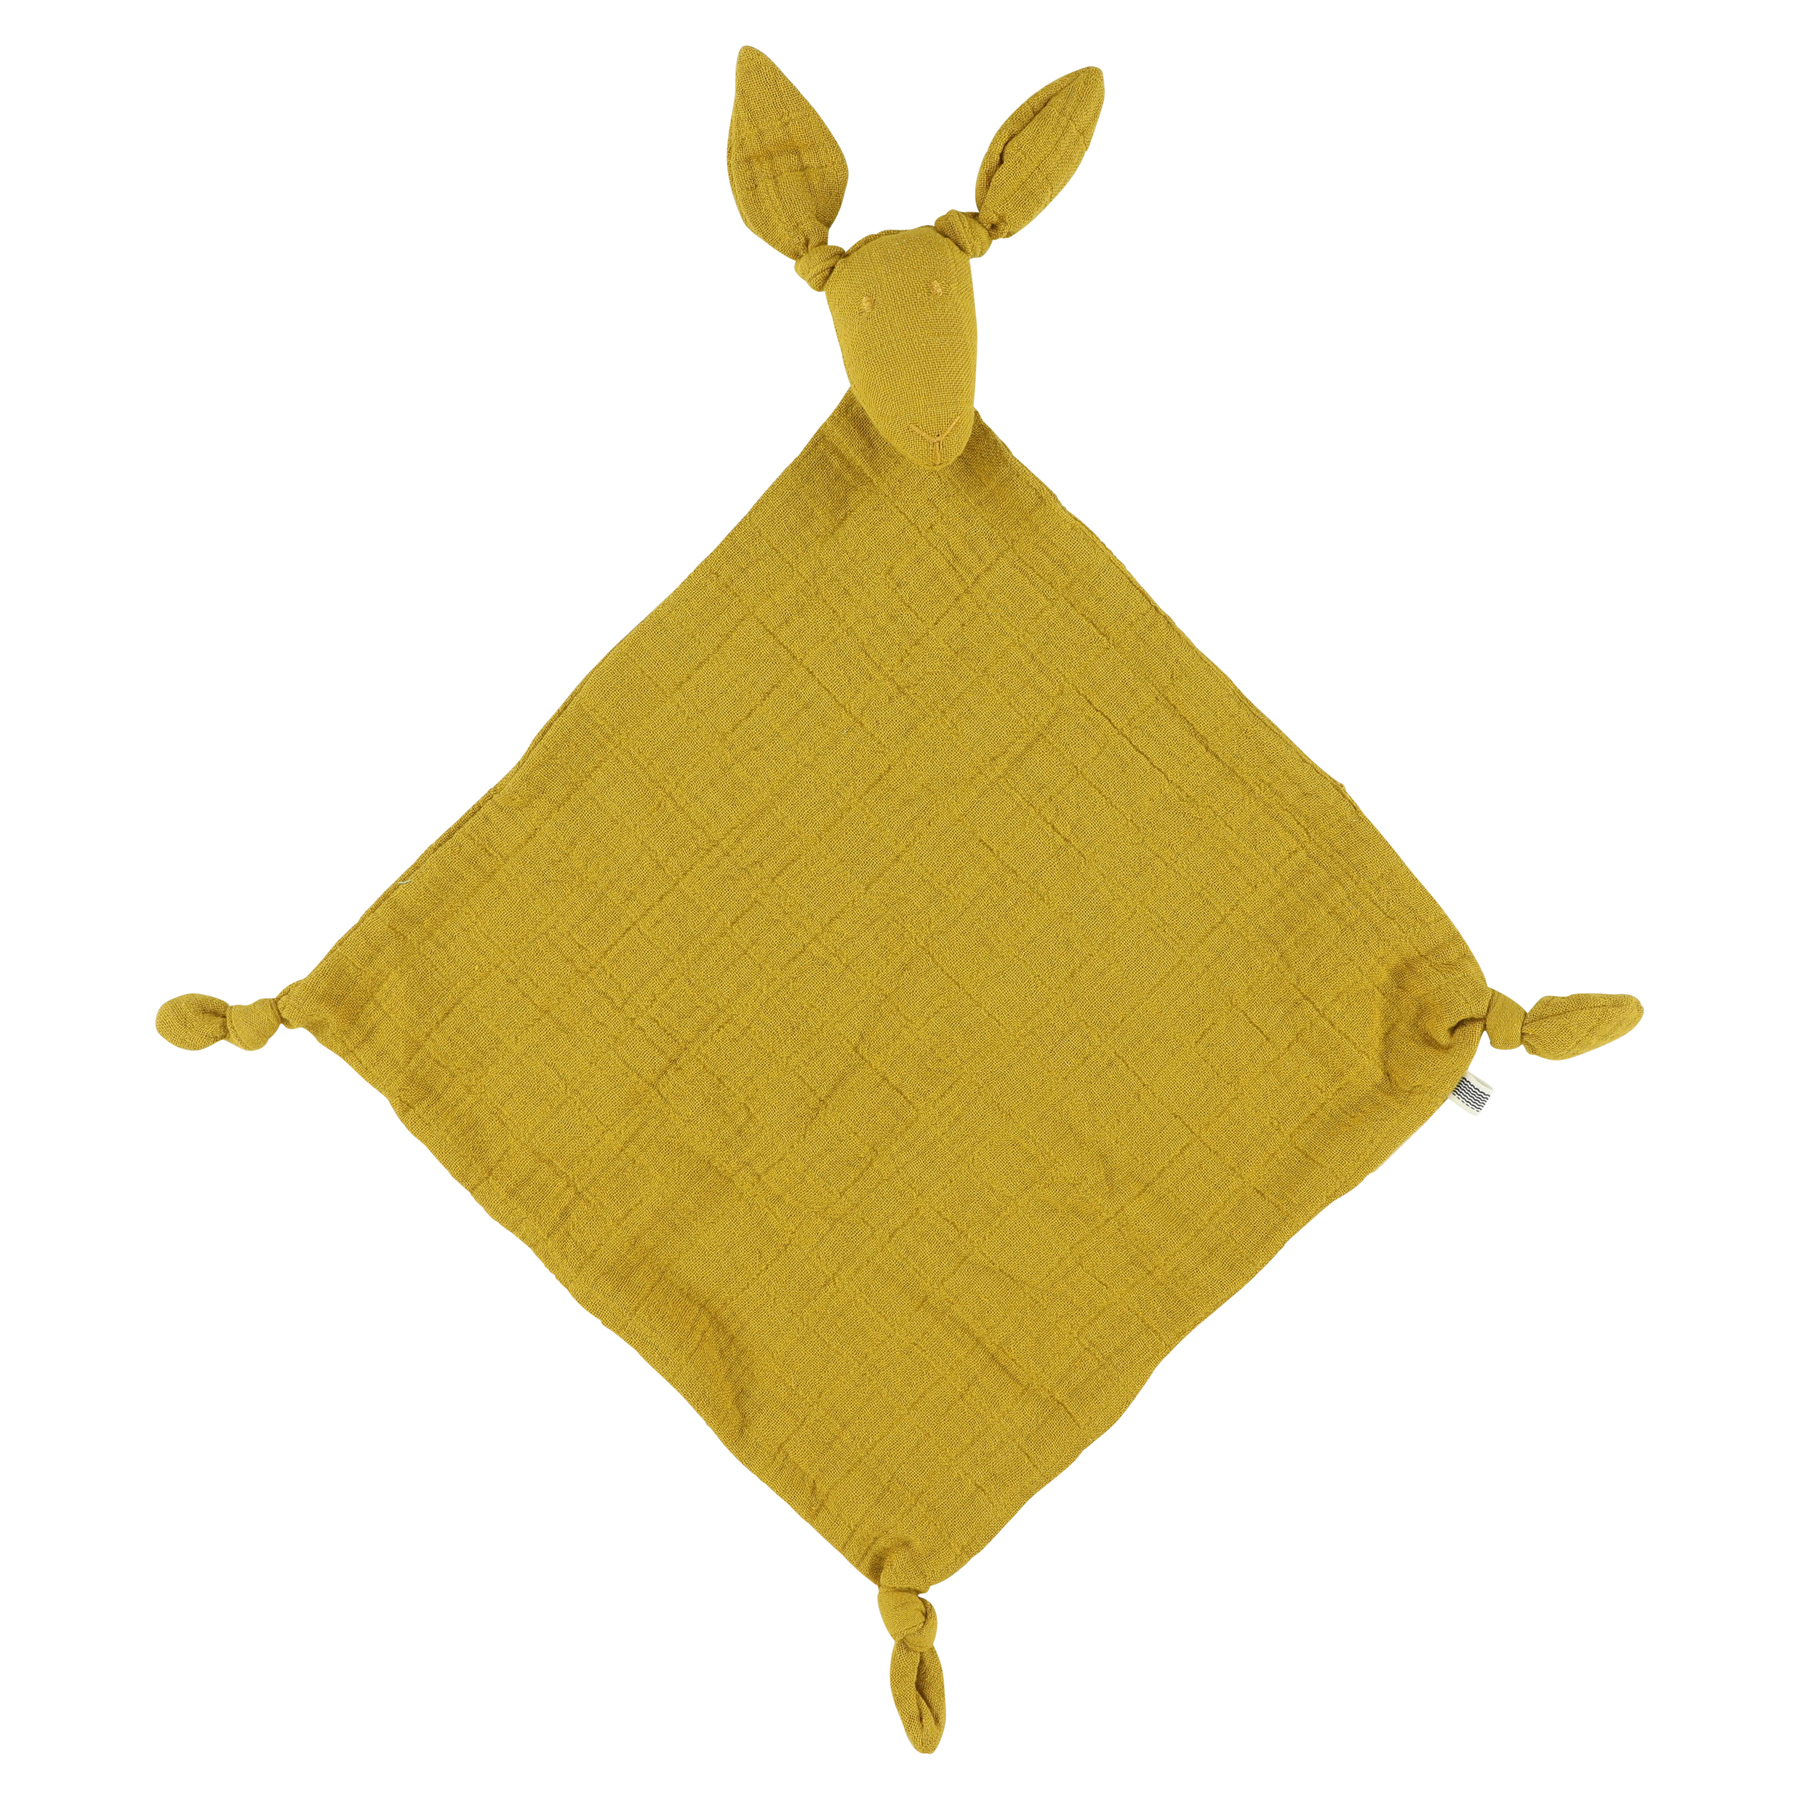 Kangaroo muslin cloth - Bliss Mustard 